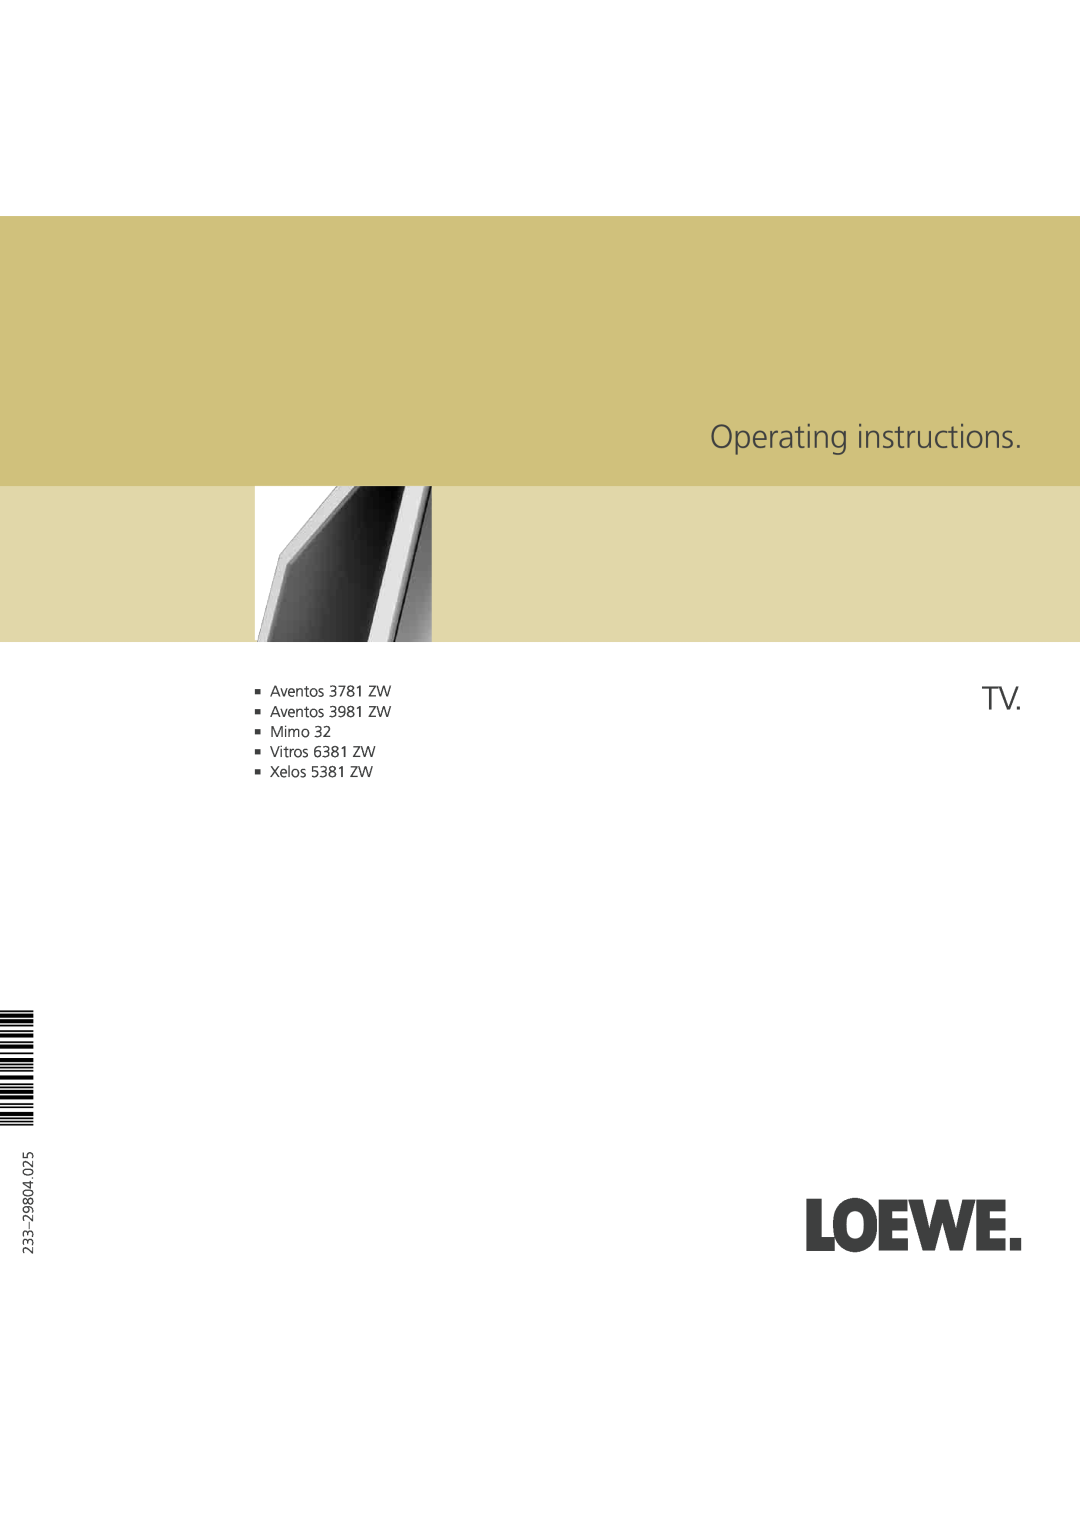 Loewe 3781 ZW, 3981 ZW, 32, 6381 ZW, 5381 ZW operating instructions Operating instructions TV, 233-29804.025 